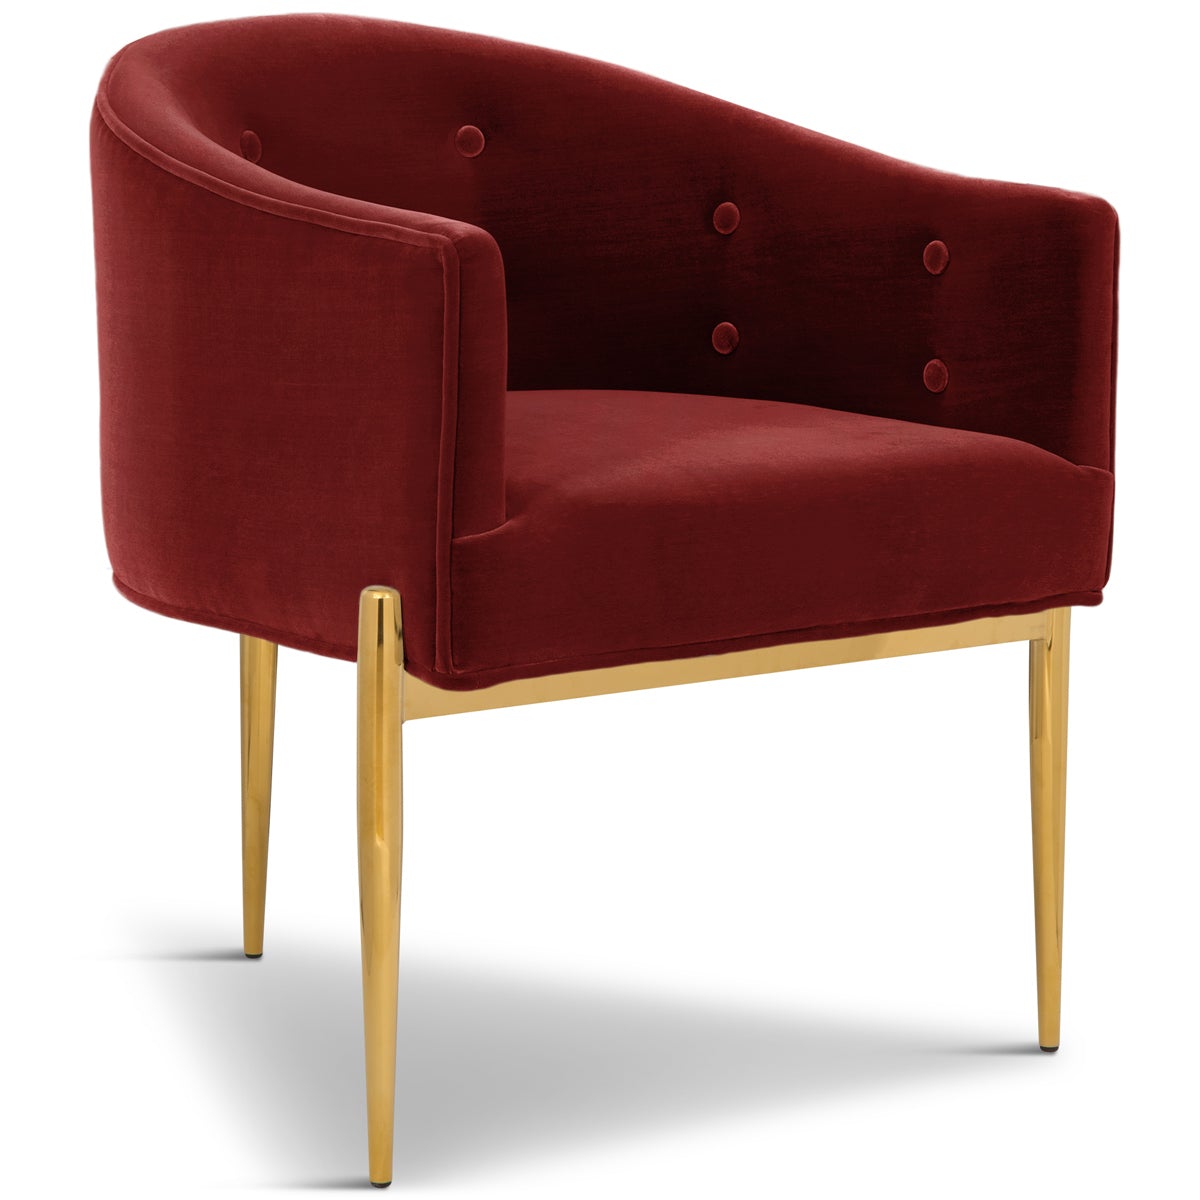 Art Deco Chairs Shop - Www.Escapeslacumbre.Es 1693593142